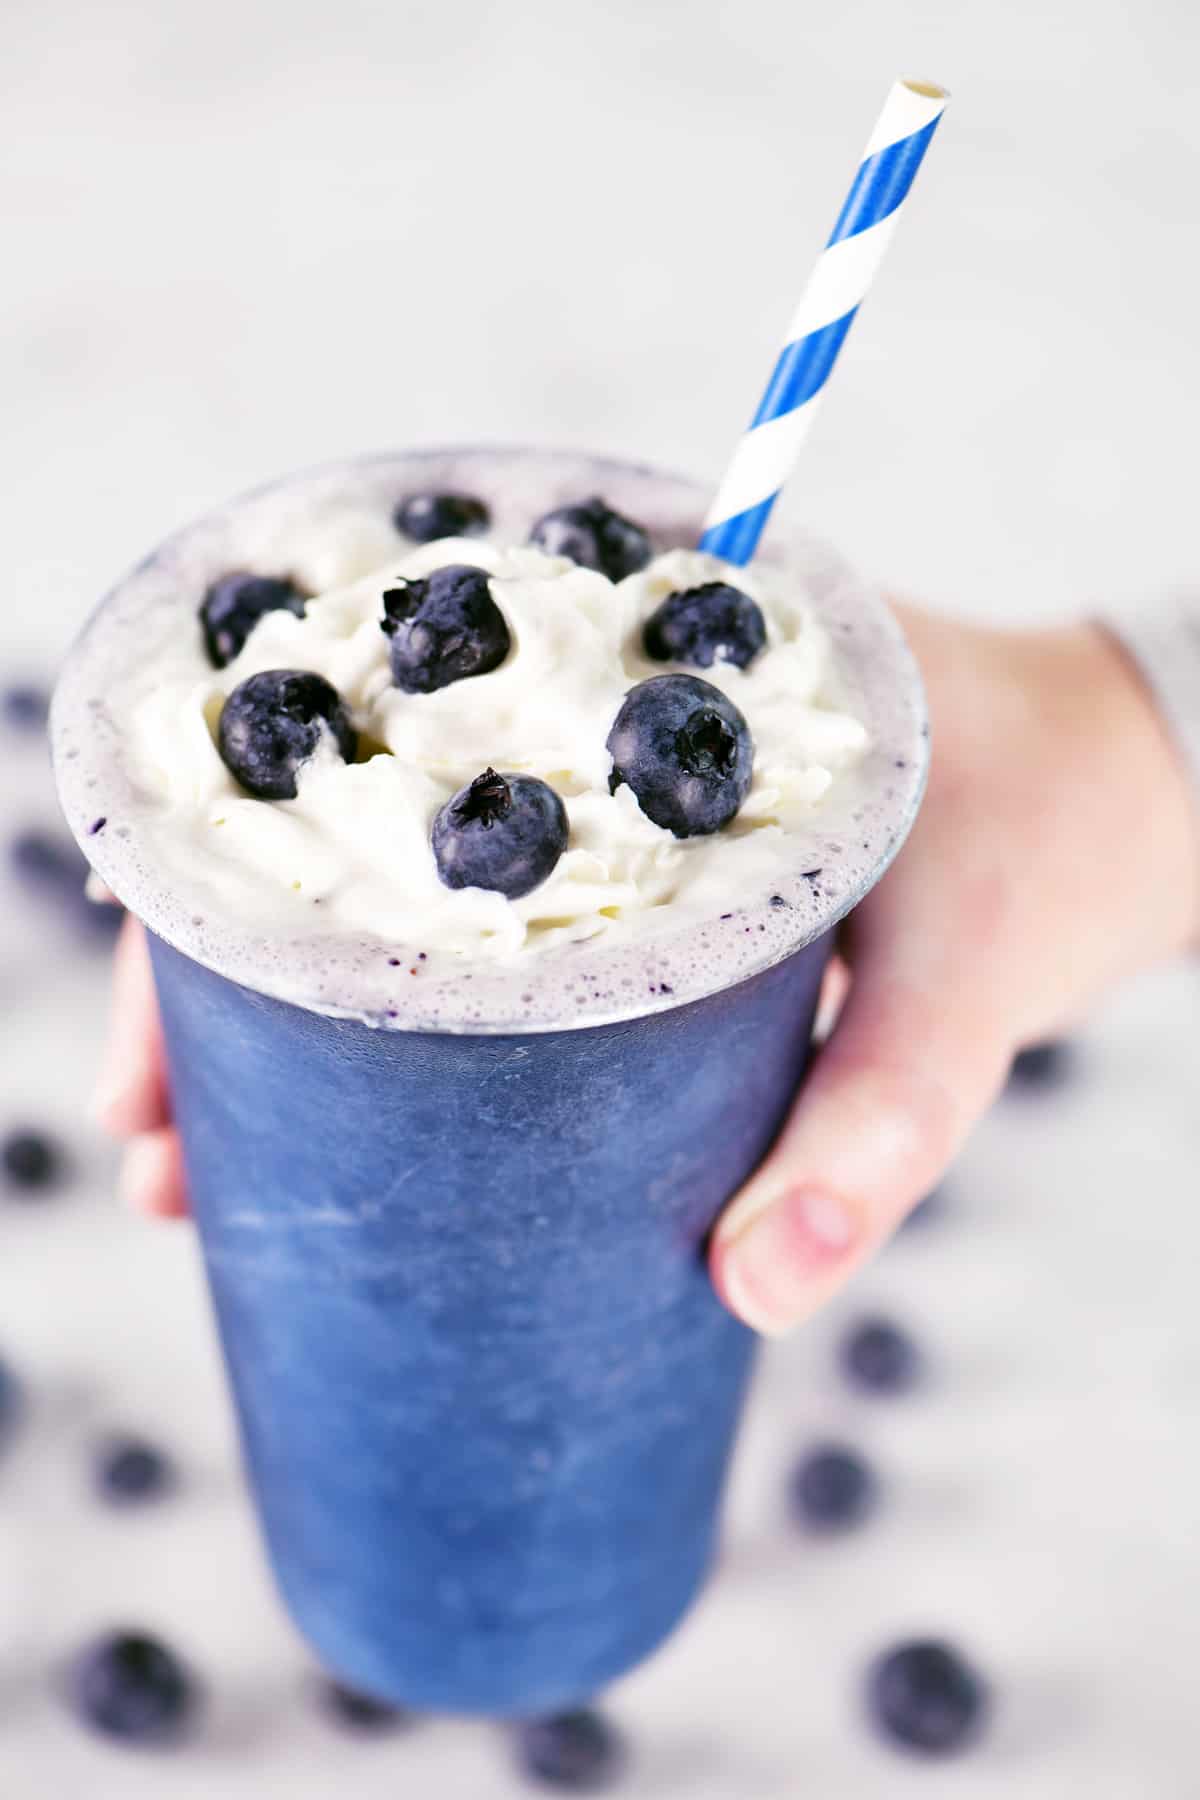 A hand holding a blueberry milkshake.